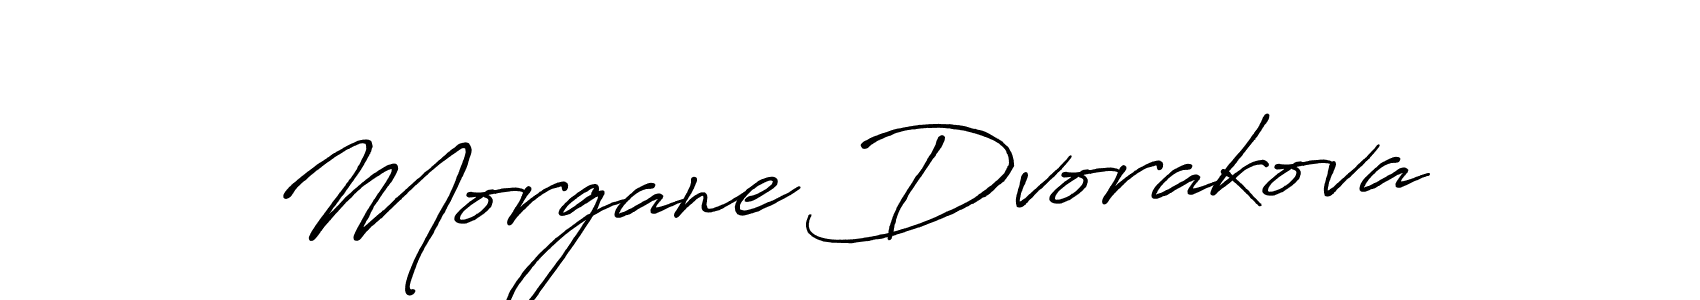 How to Draw Morgane Dvorakova signature style? Antro_Vectra_Bolder is a latest design signature styles for name Morgane Dvorakova. Morgane Dvorakova signature style 7 images and pictures png